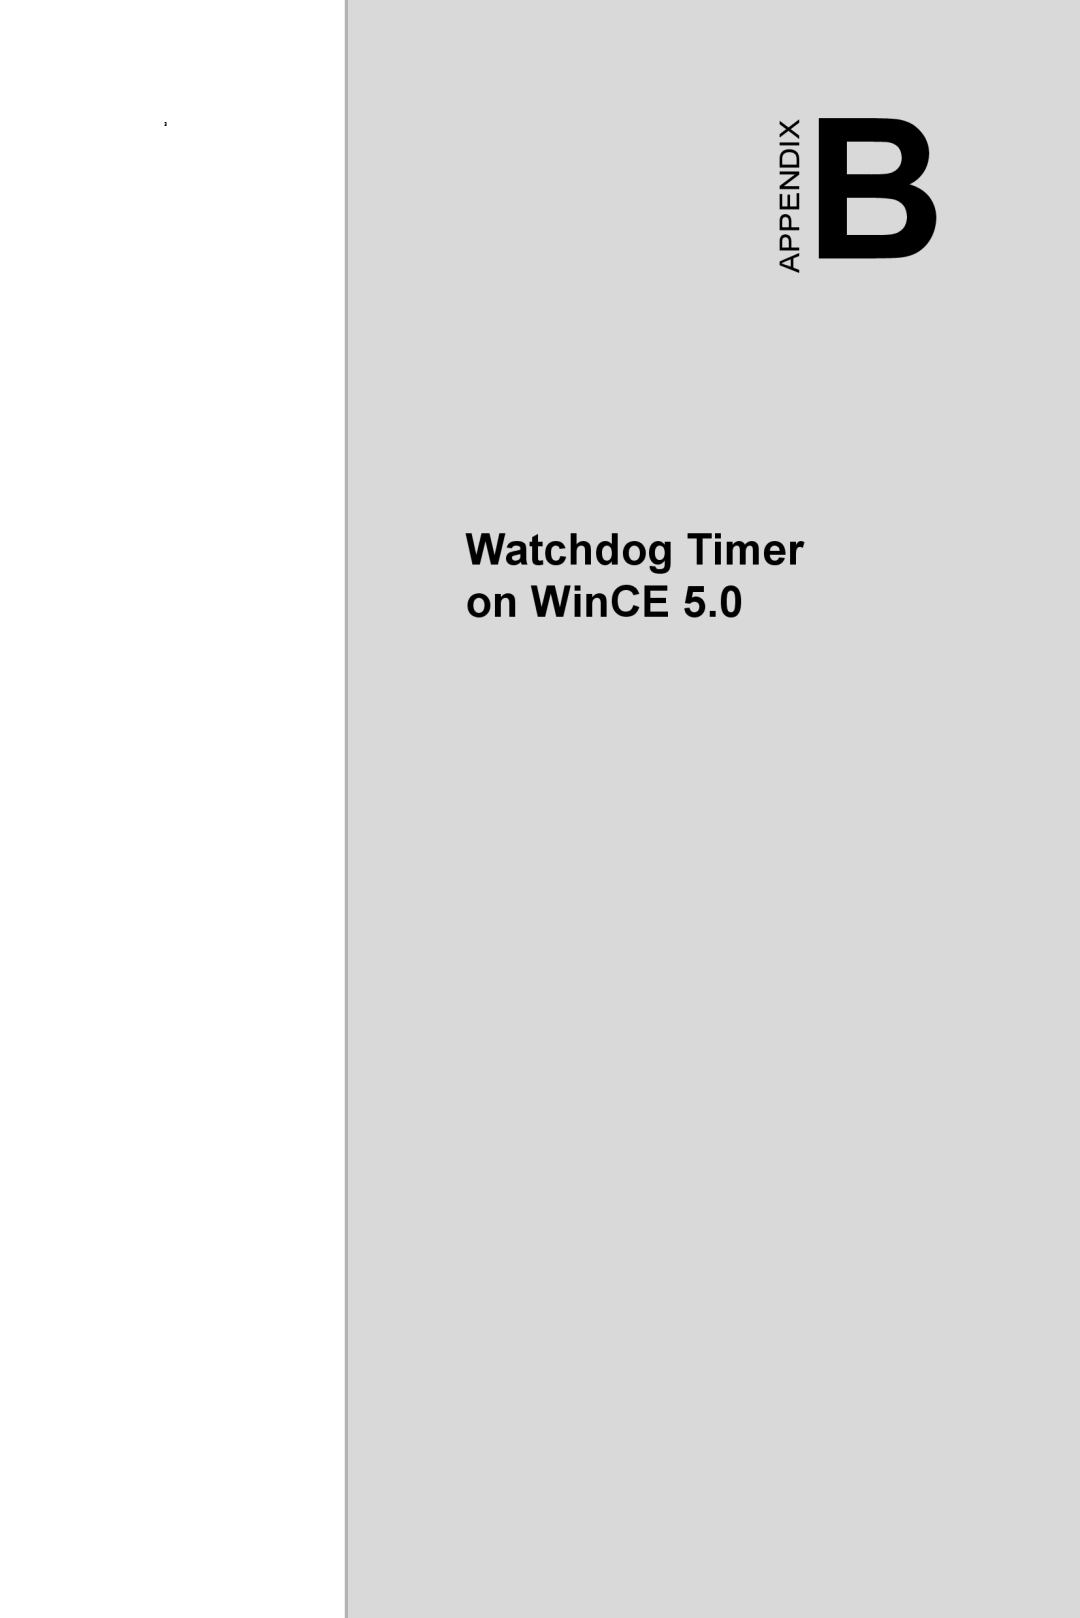 Intel TPC-1070 user manual Watchdog Timer on WinCE, Appendix 